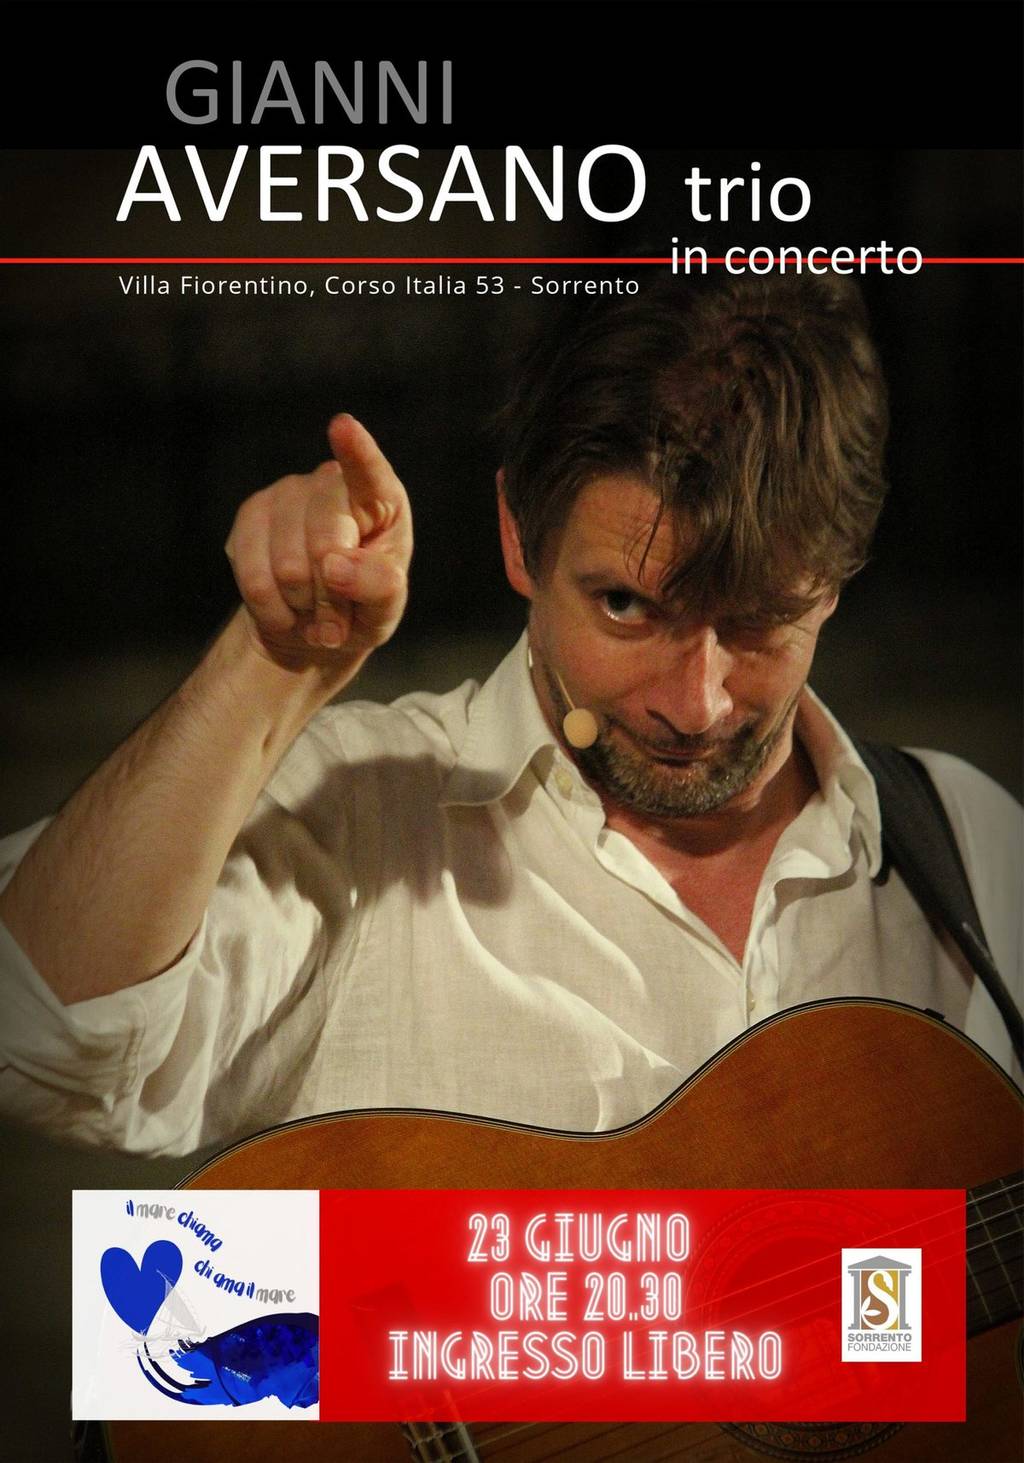 Gianni Aversano in concerto